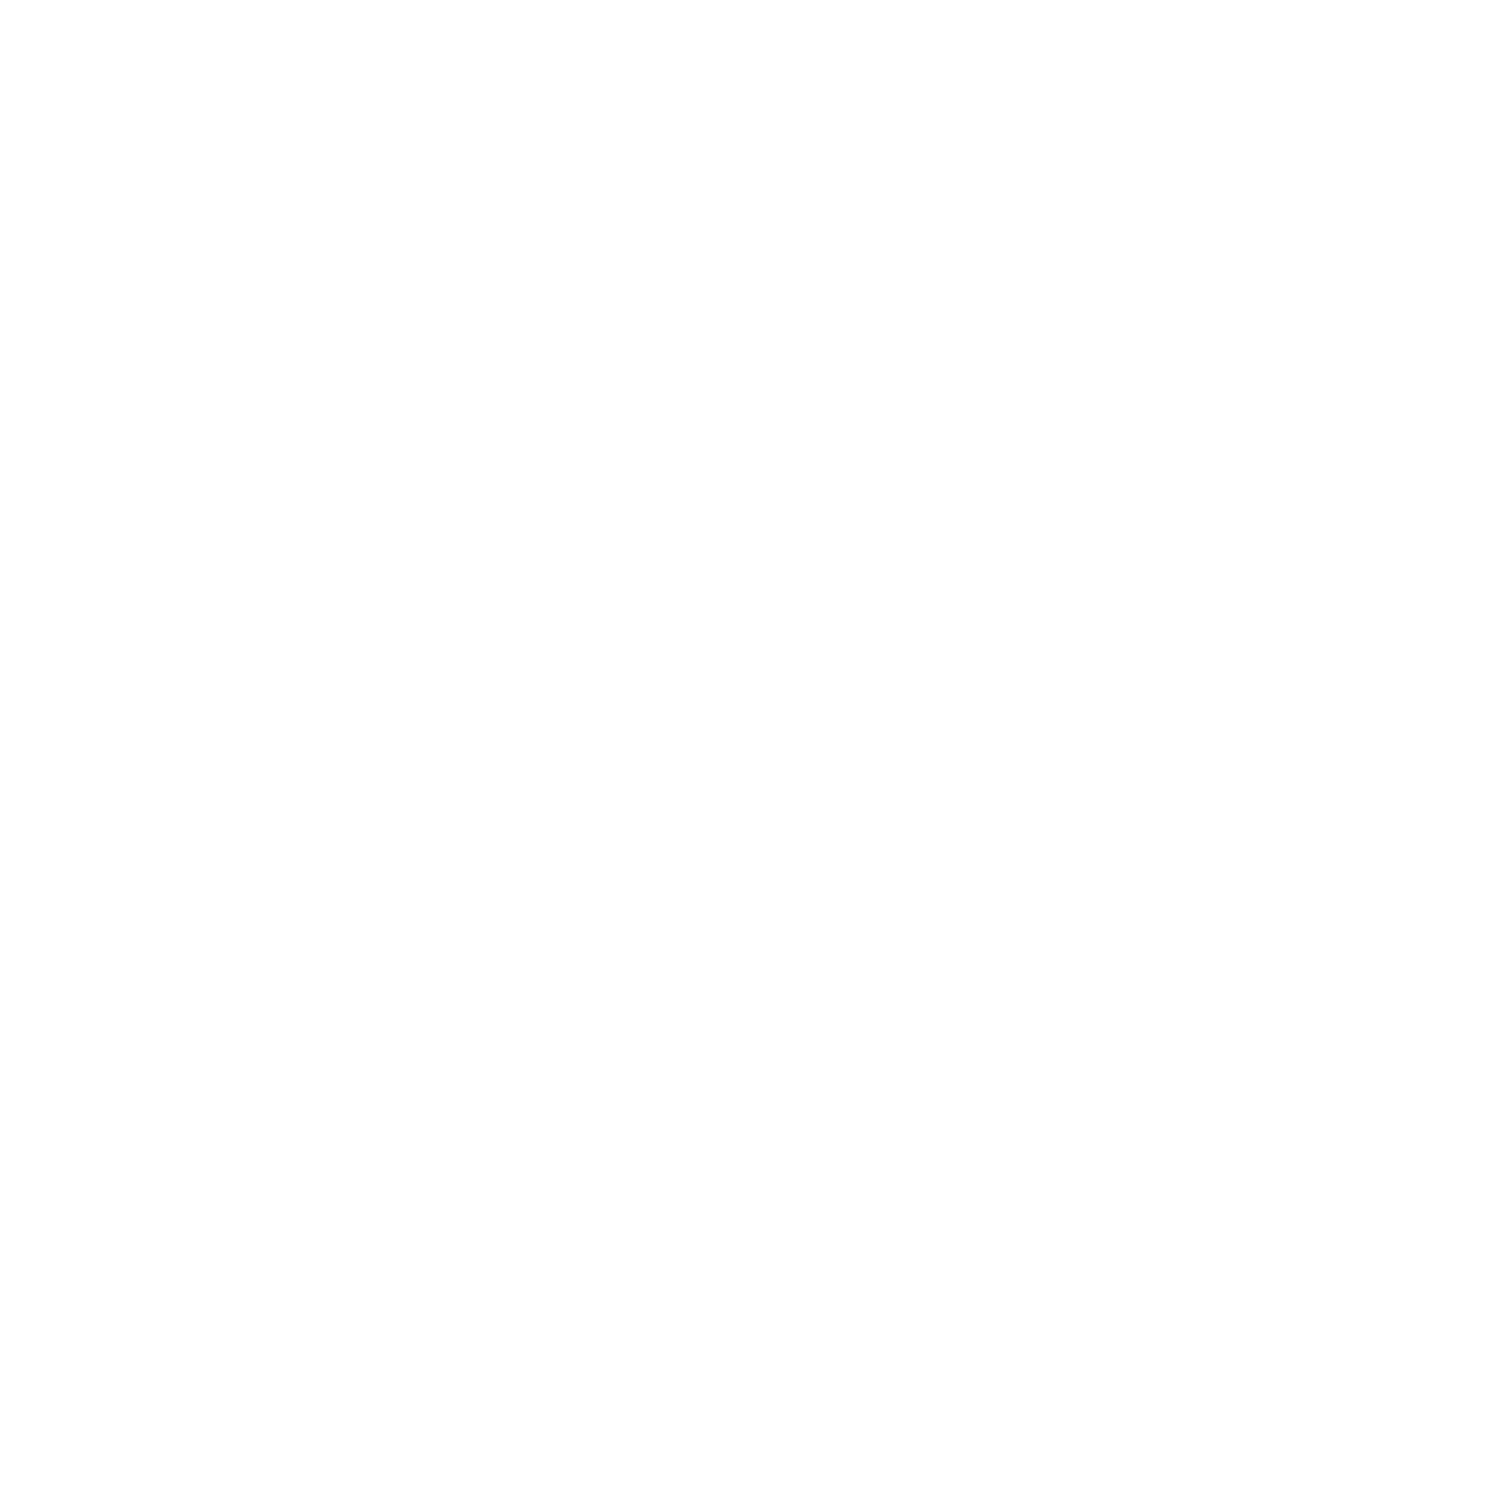 Meet me backstage